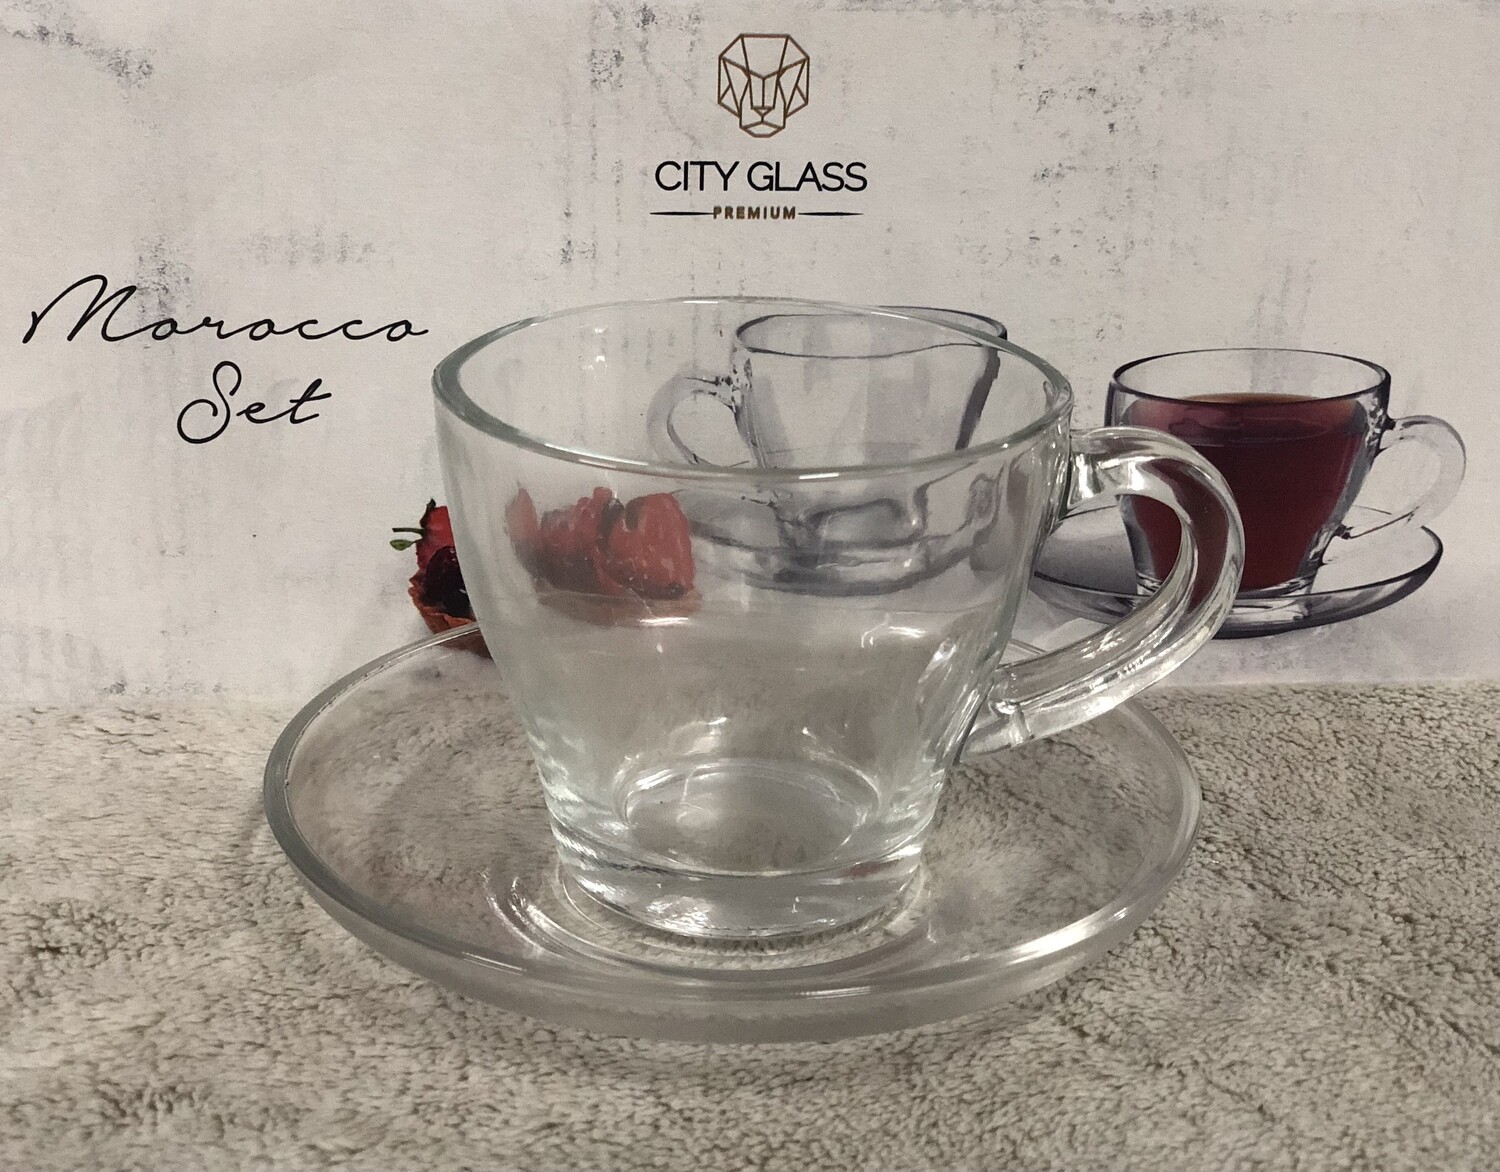 City glass 6pcs glass cup and saucer set